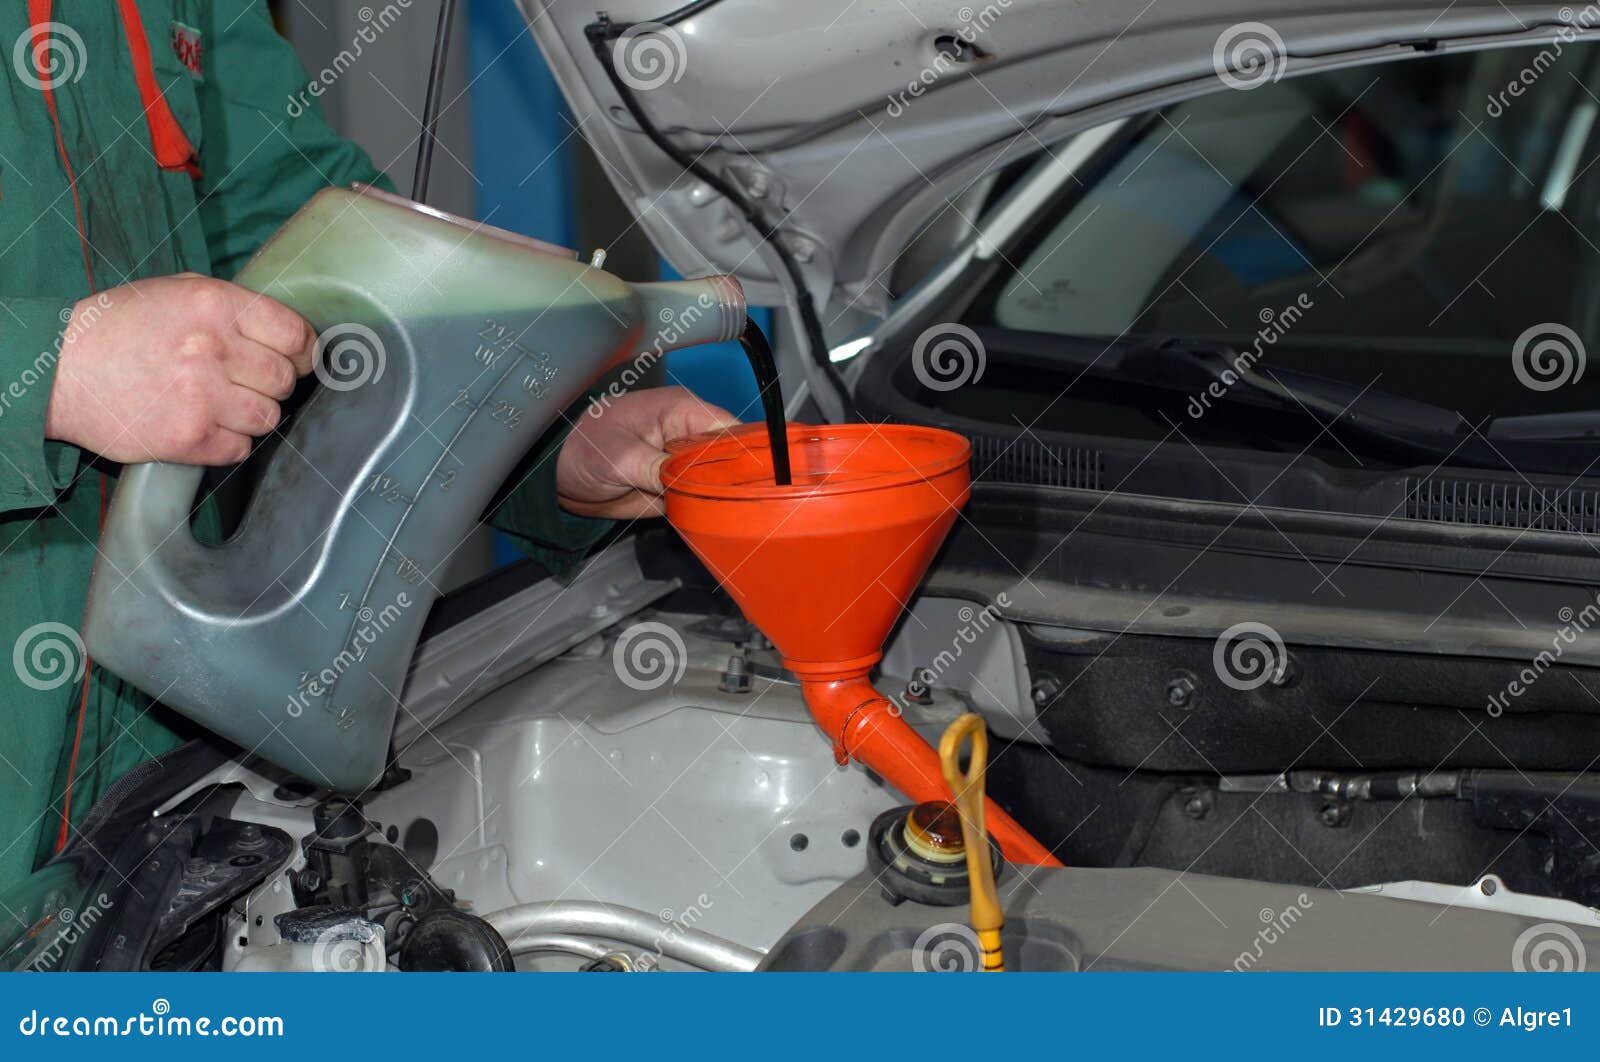 adding oil to a car